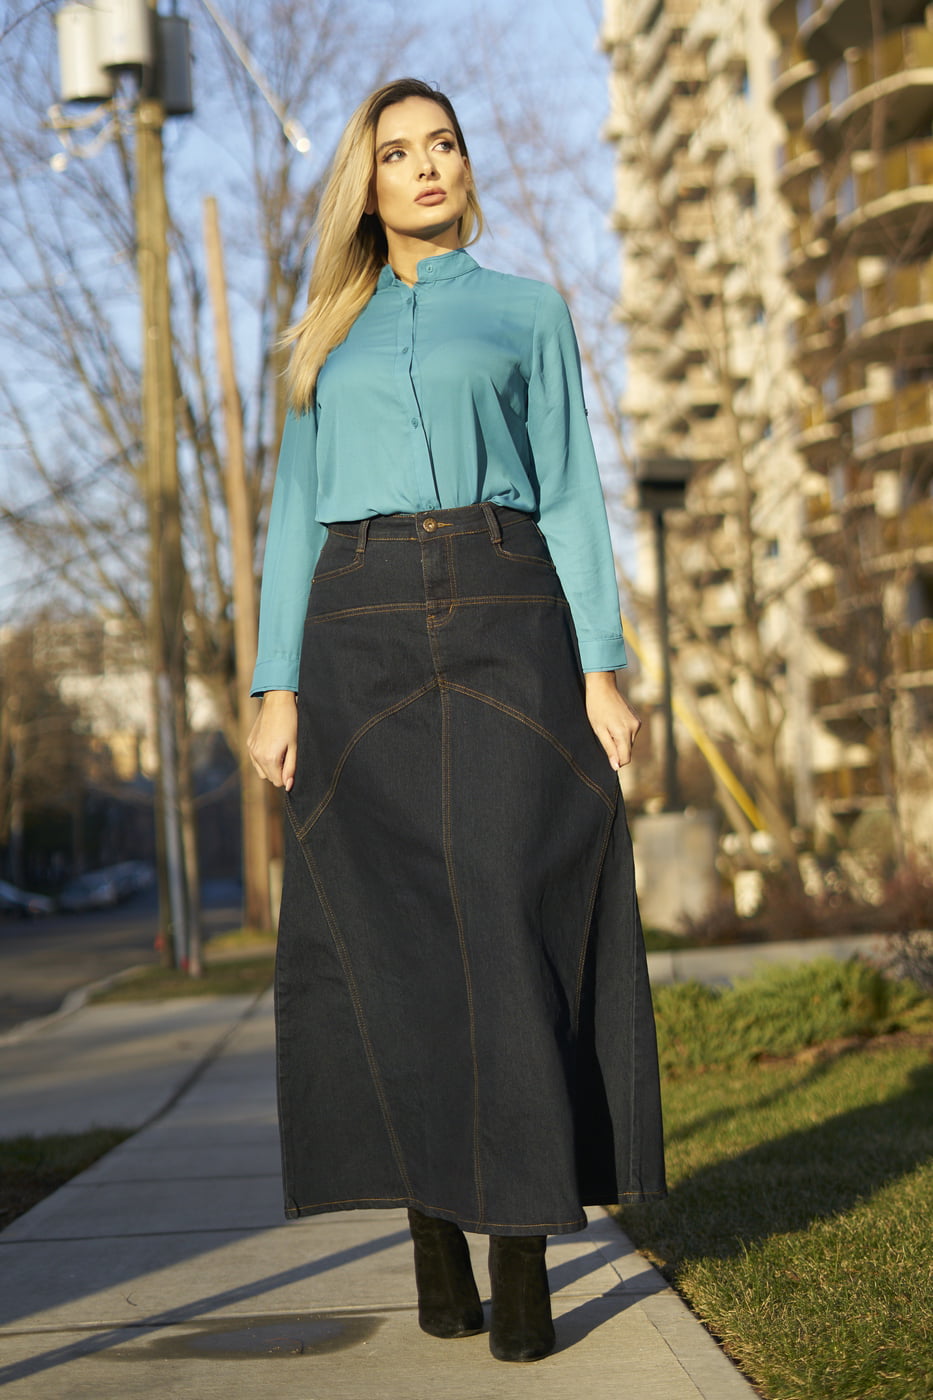 modest jean skirts plus size